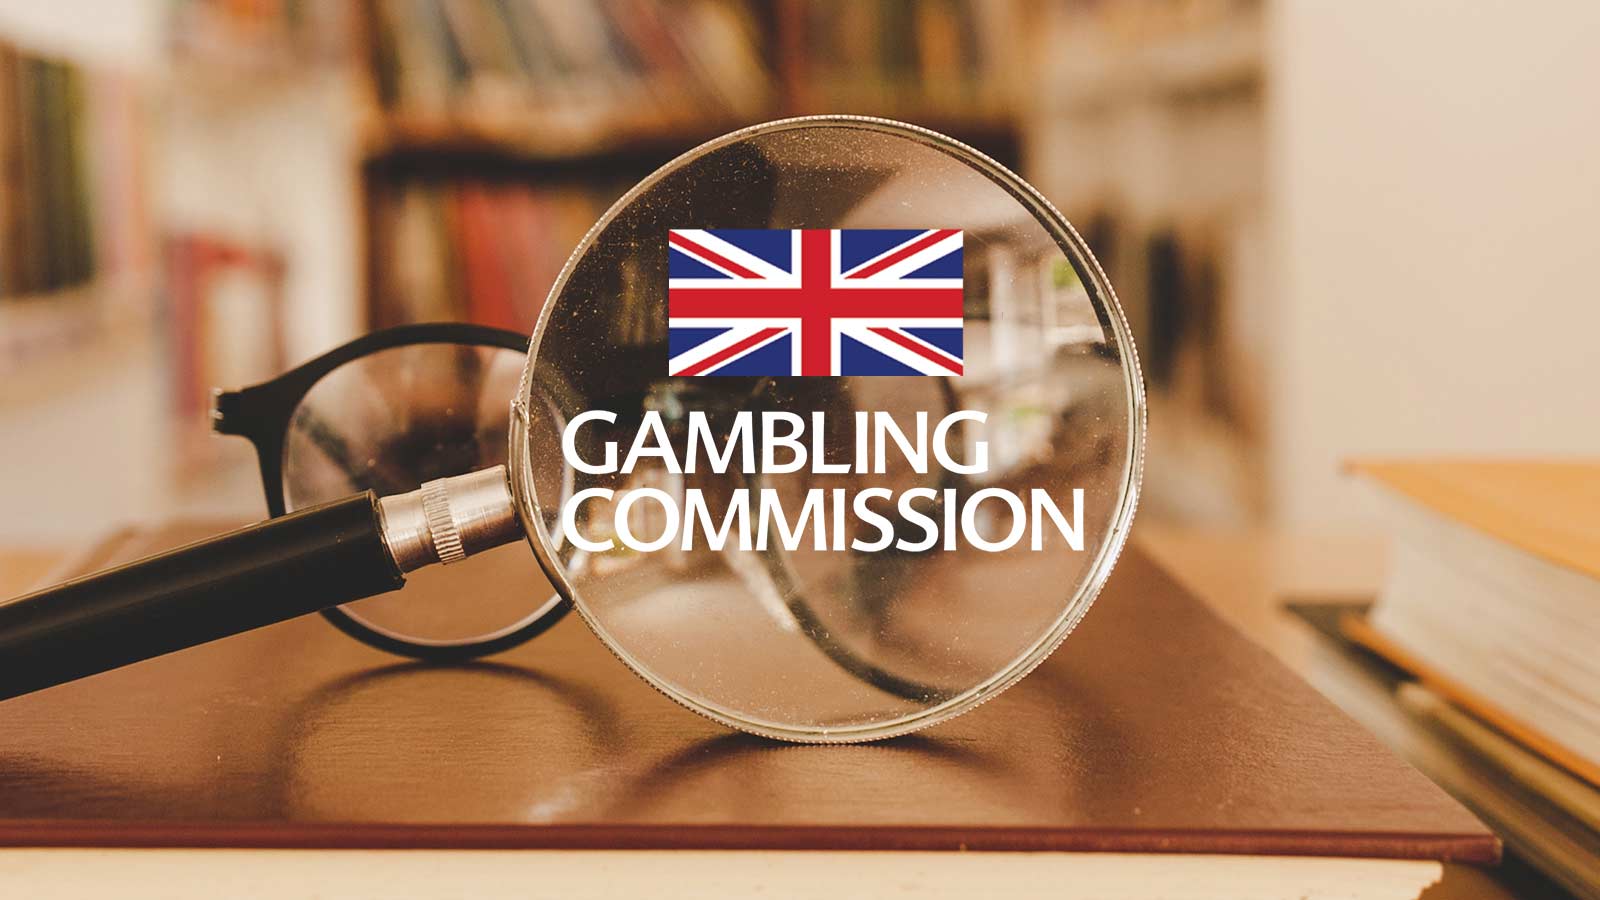 UK Gambling Commission2 